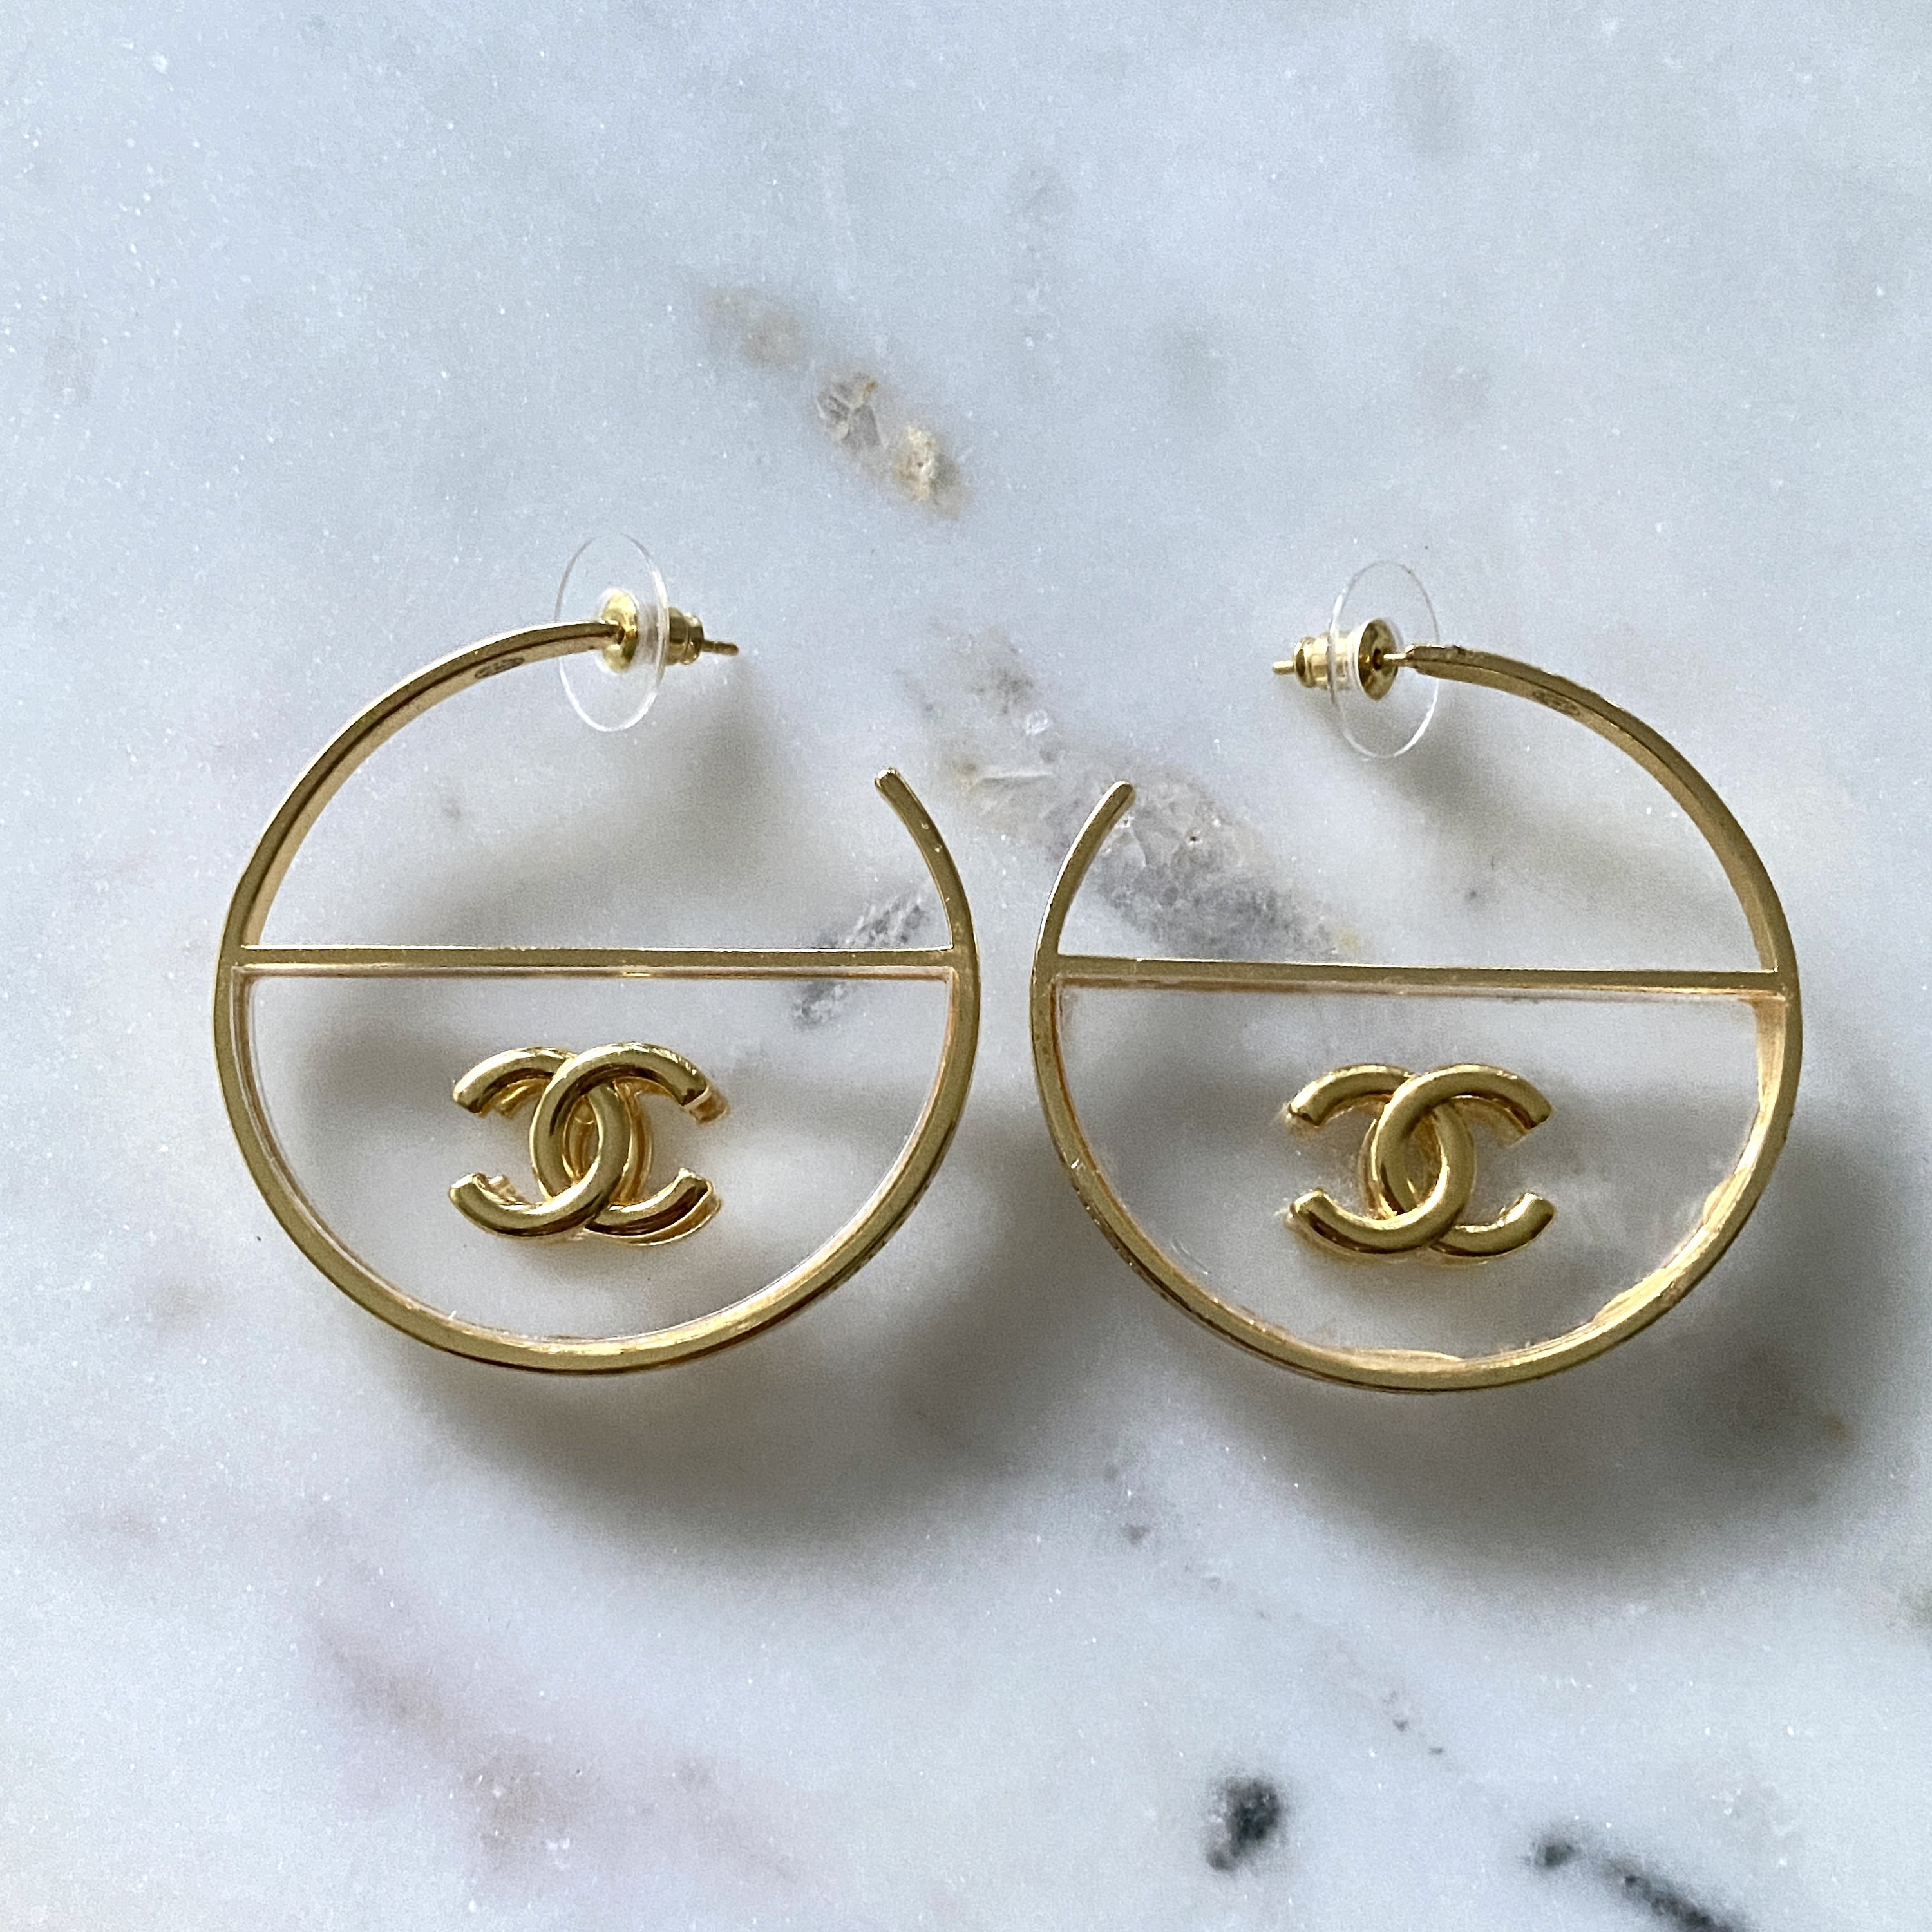 Chic Half Hoop Earrings with a Chanel-Inspired Design – El blin-blín